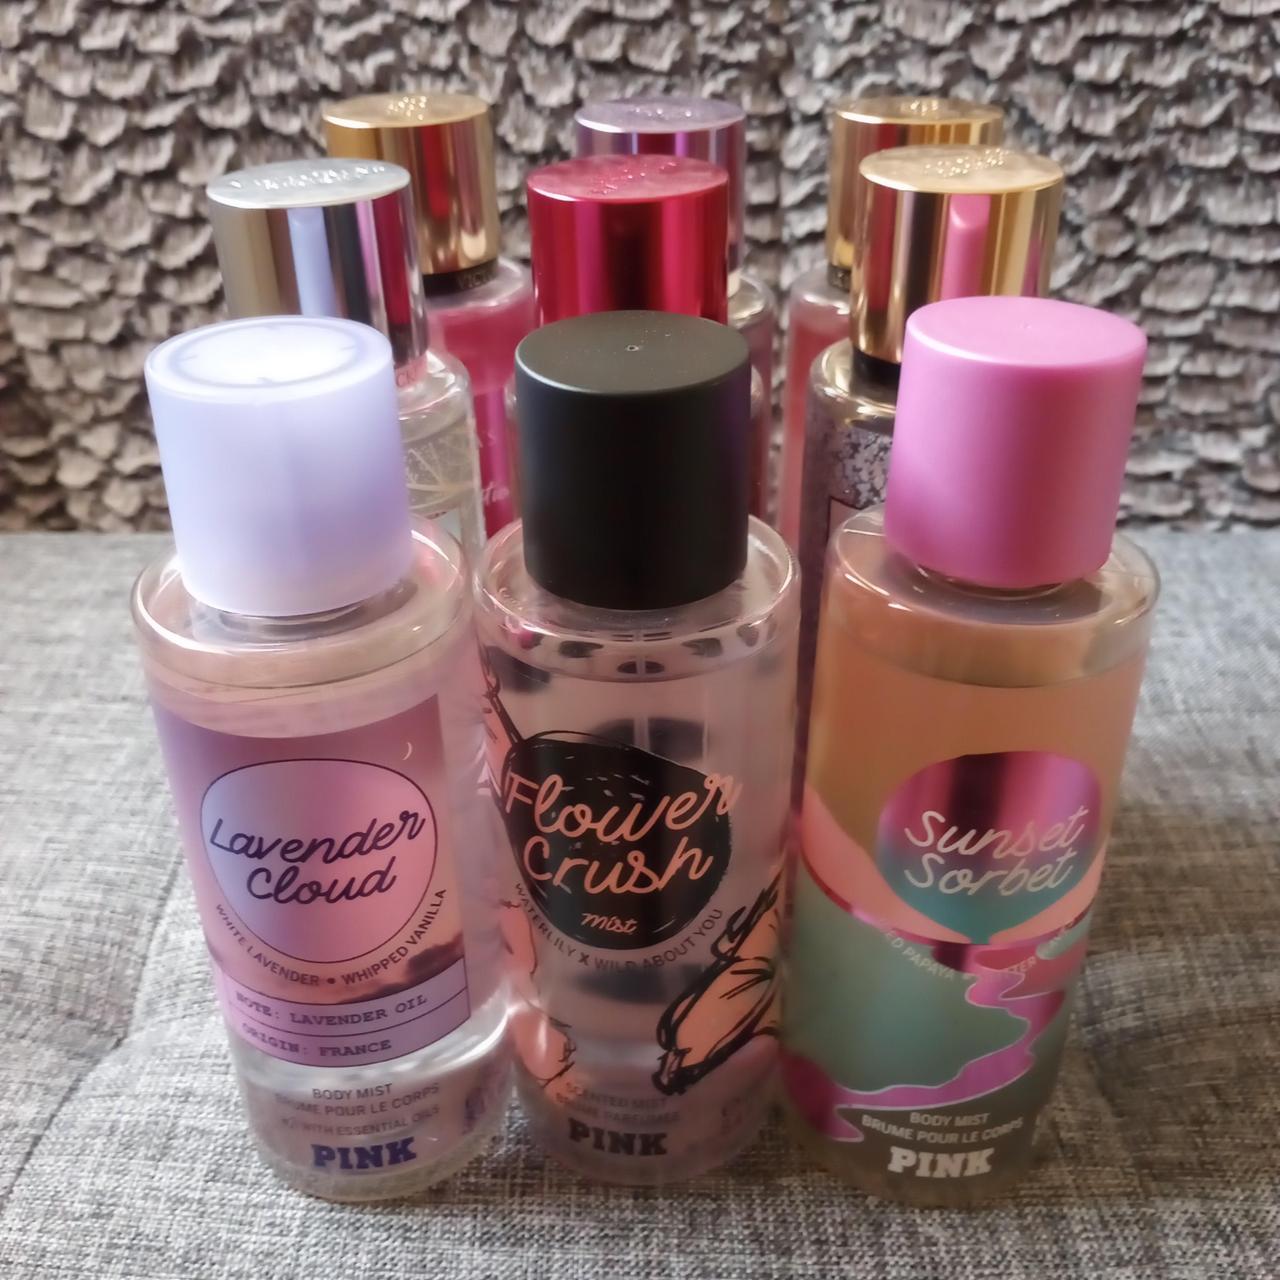 Assortment of Victoria Secret and Pink body sprays. - Depop